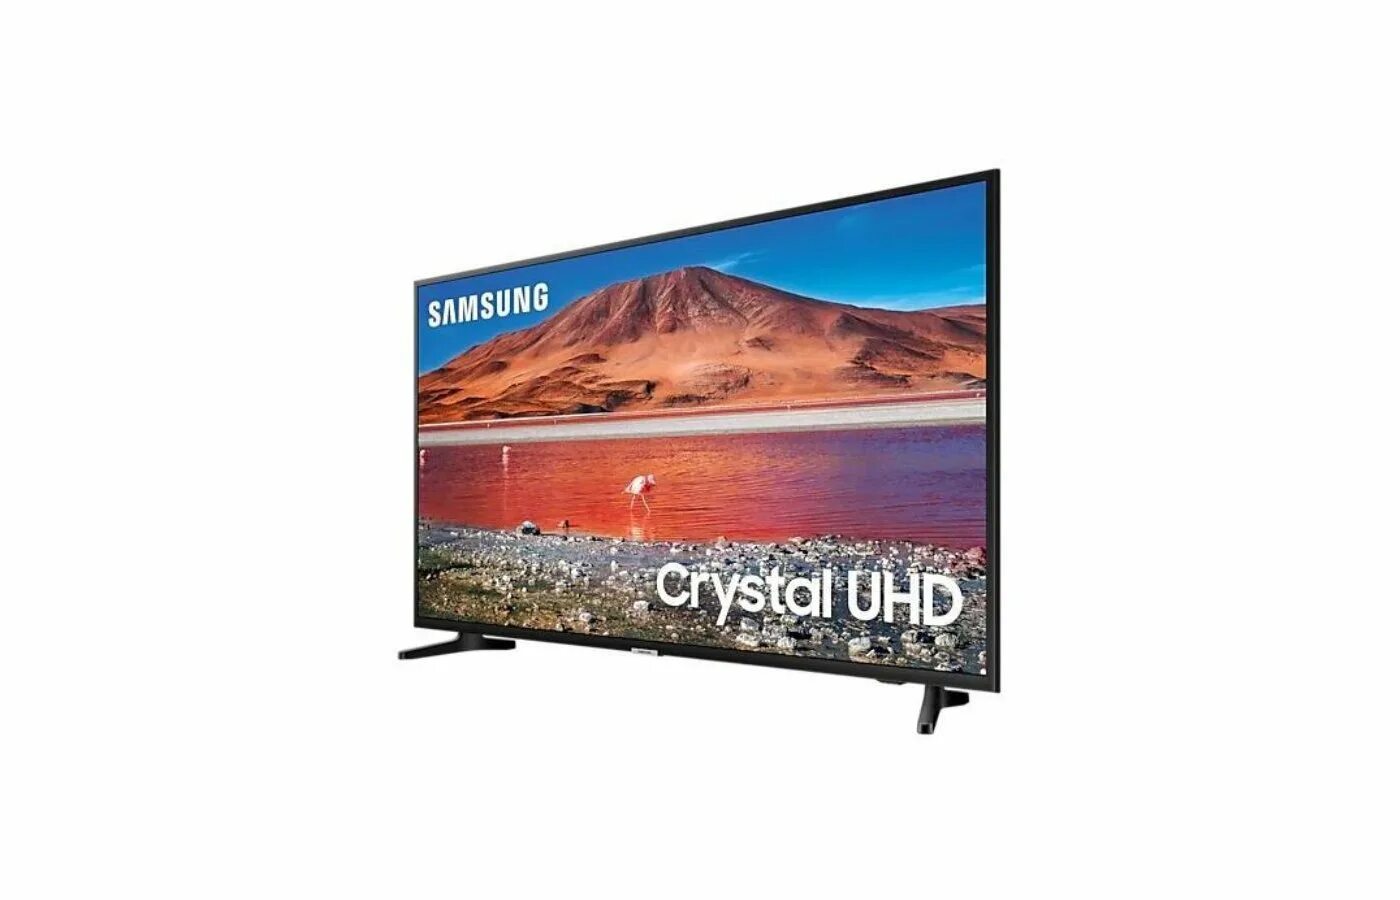 Hdr led crystal uhd. Samsung ue50tu7002. Телевизор Samsung ue43tu7002u. Samsung ue50tu7500u. Samsung ue50tu7002u 2020 led, HDR.